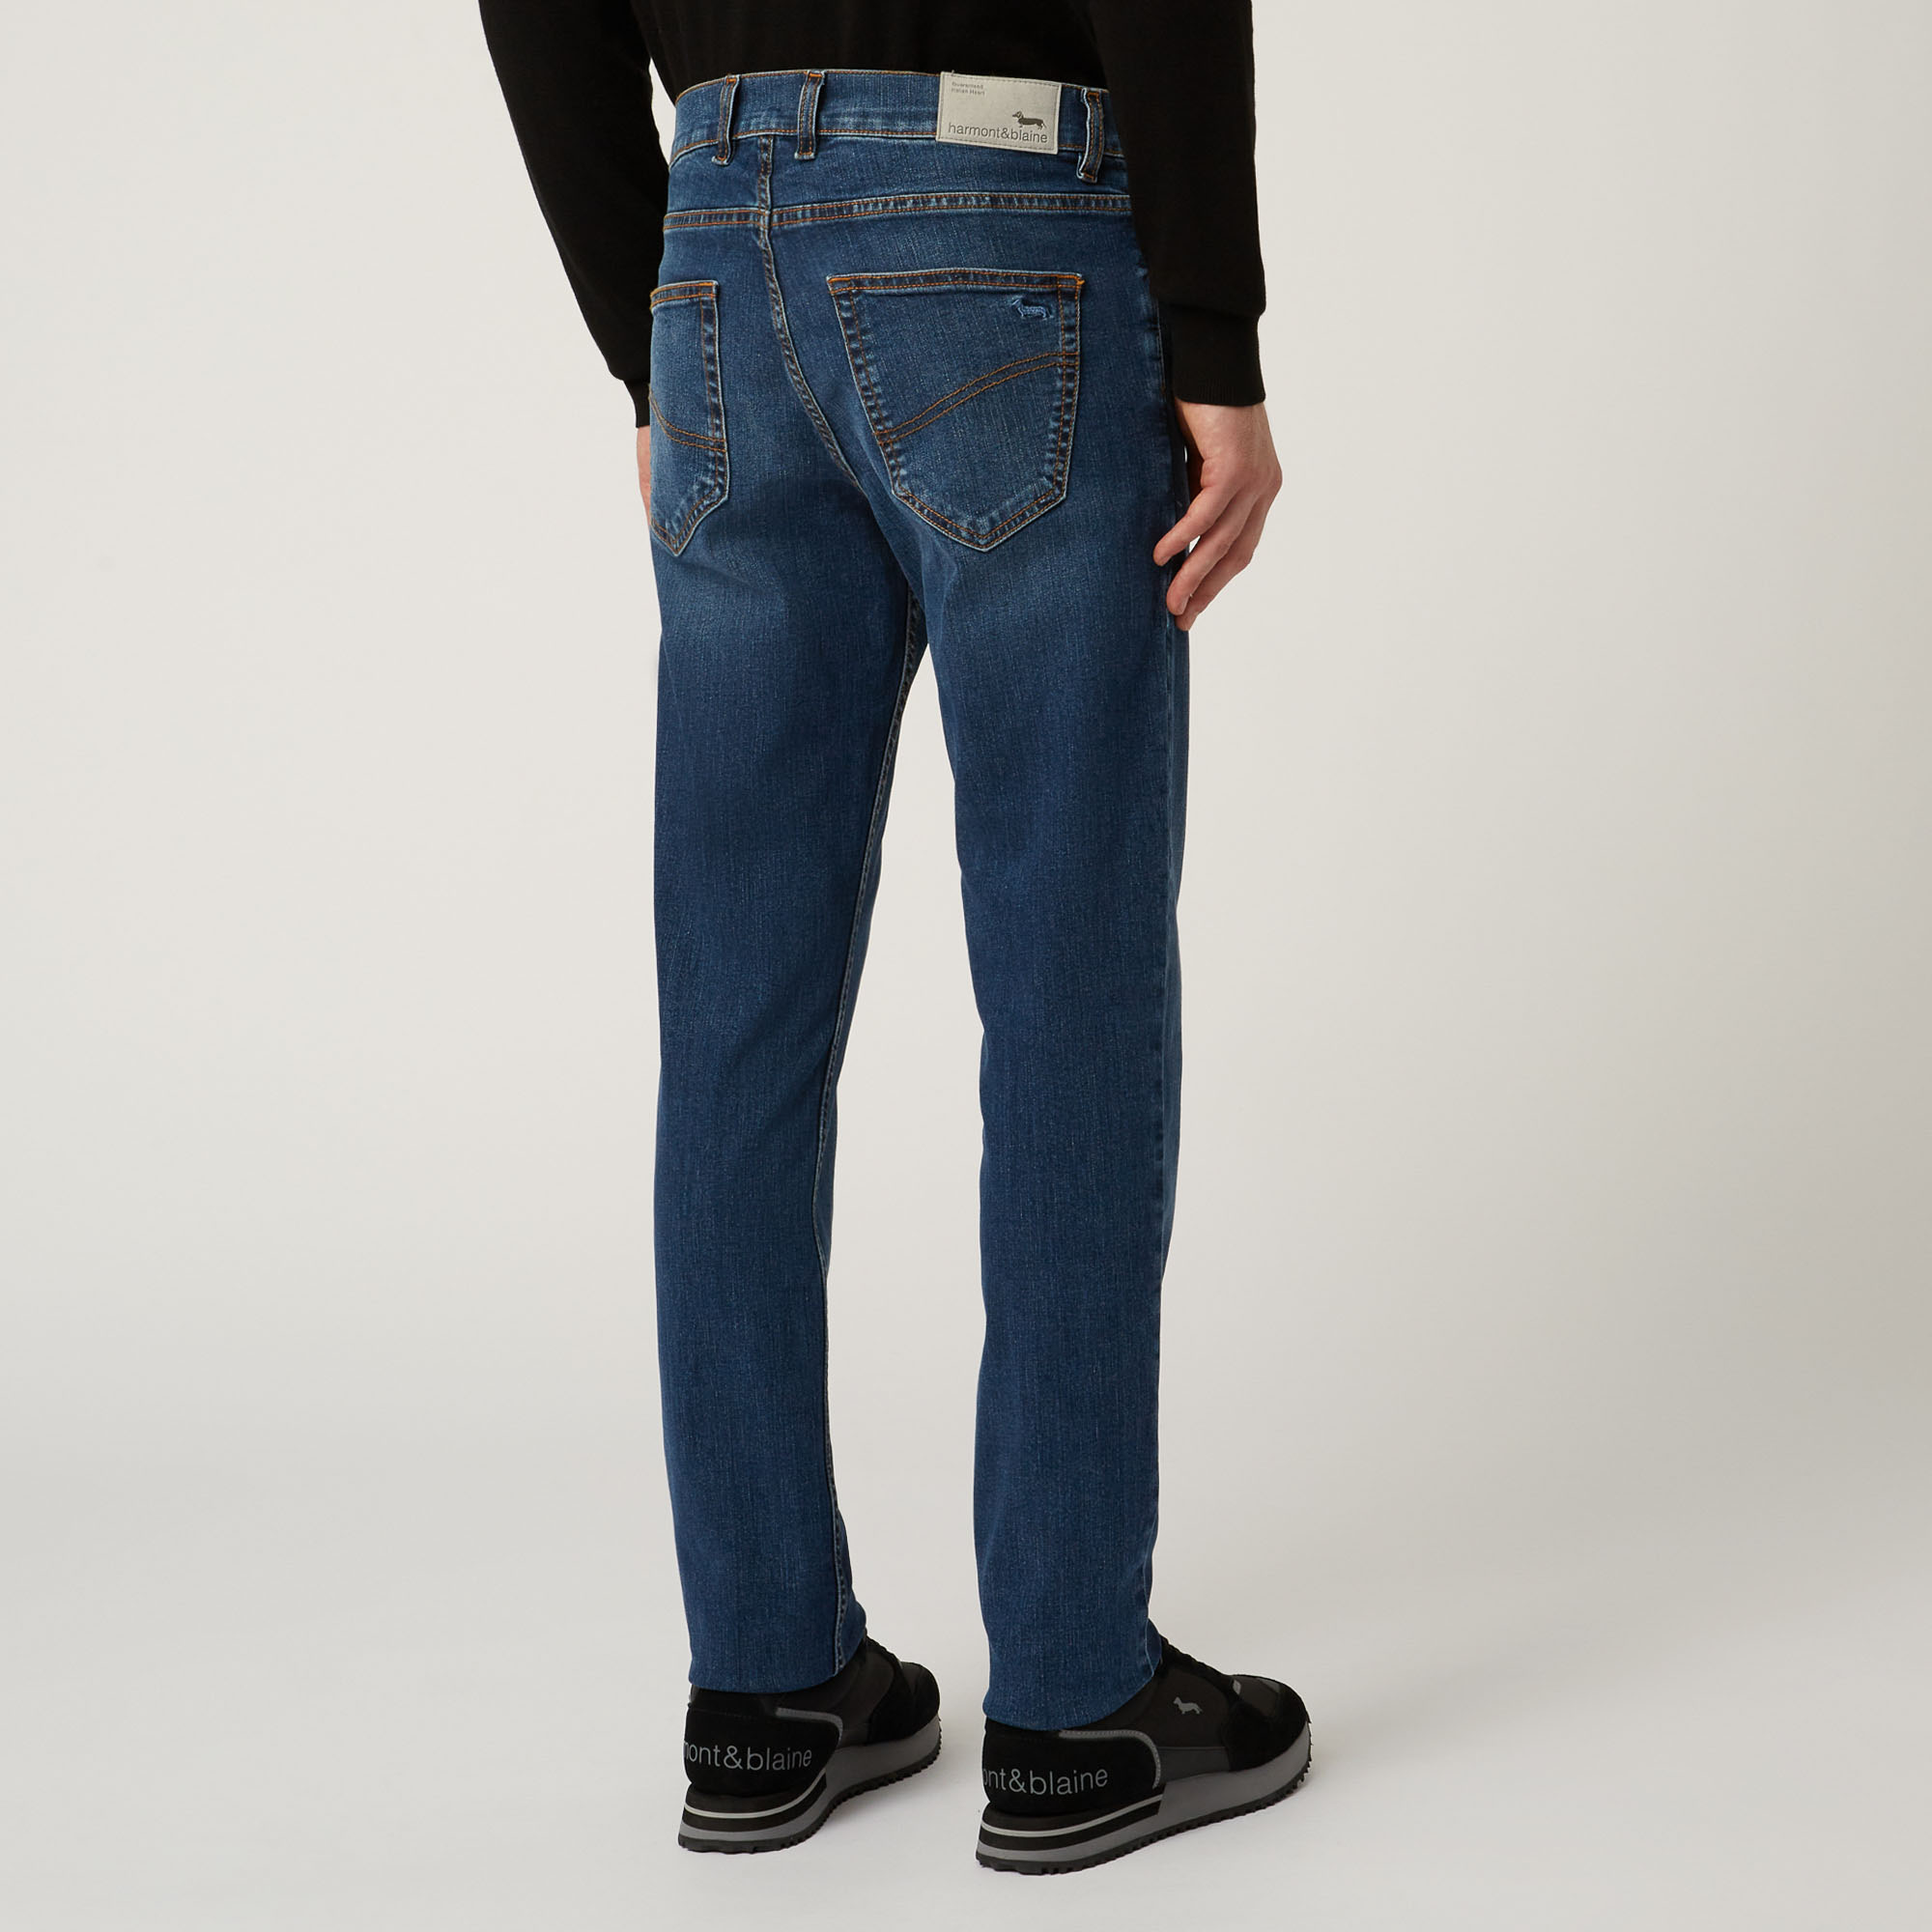 Essentials 5 pocket denim jeans